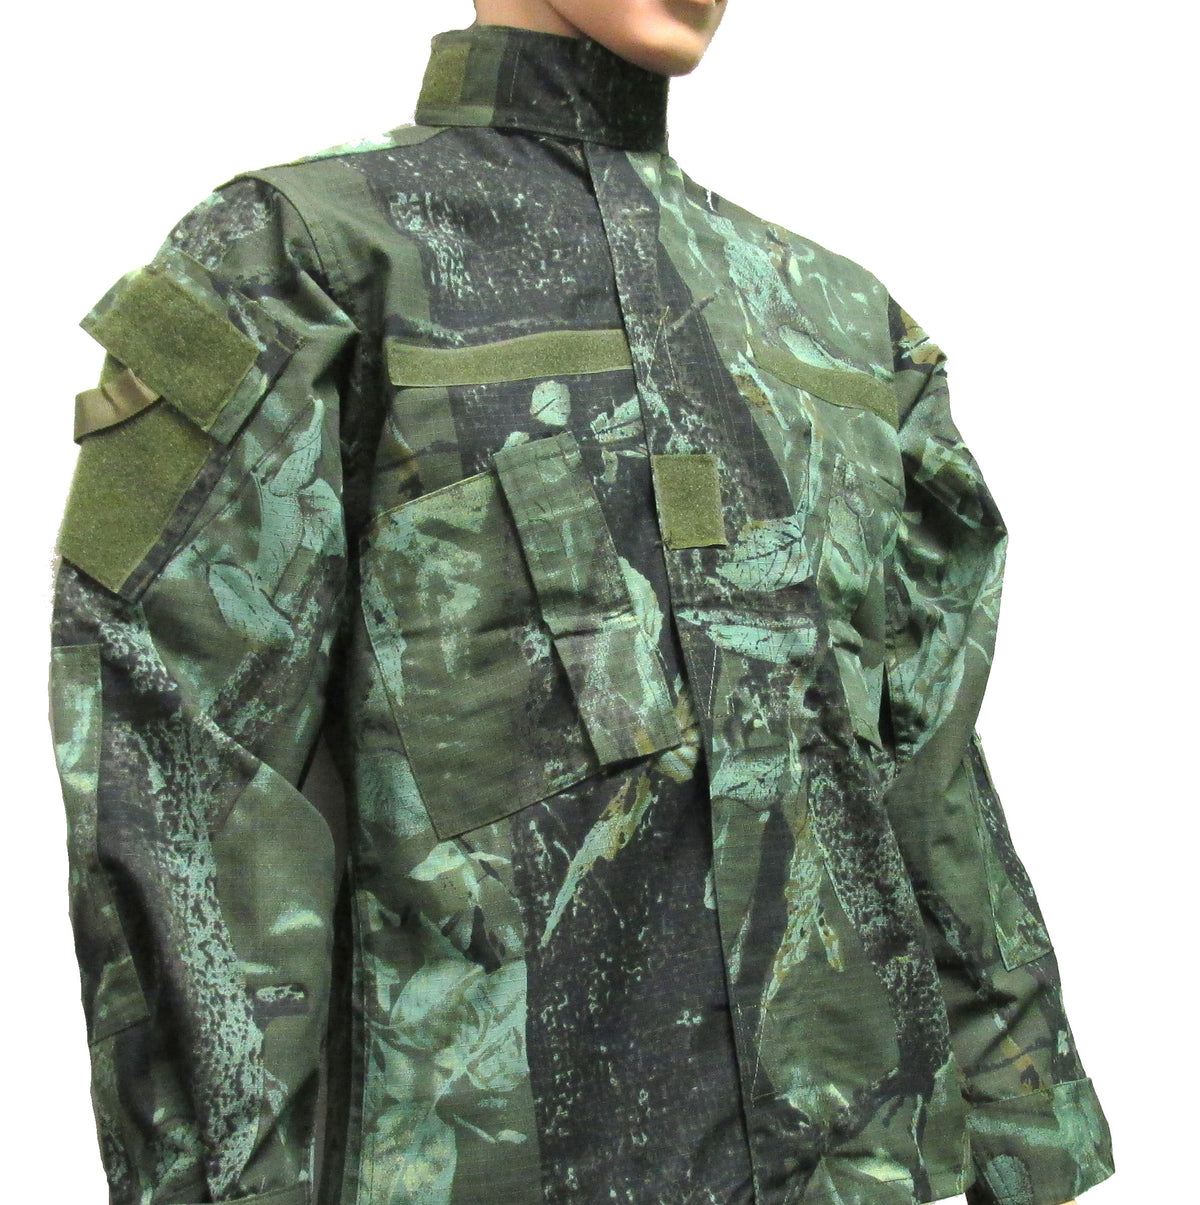 CLEARANCE ACU Style Military Jacket - Green Leaf Hunting Camo